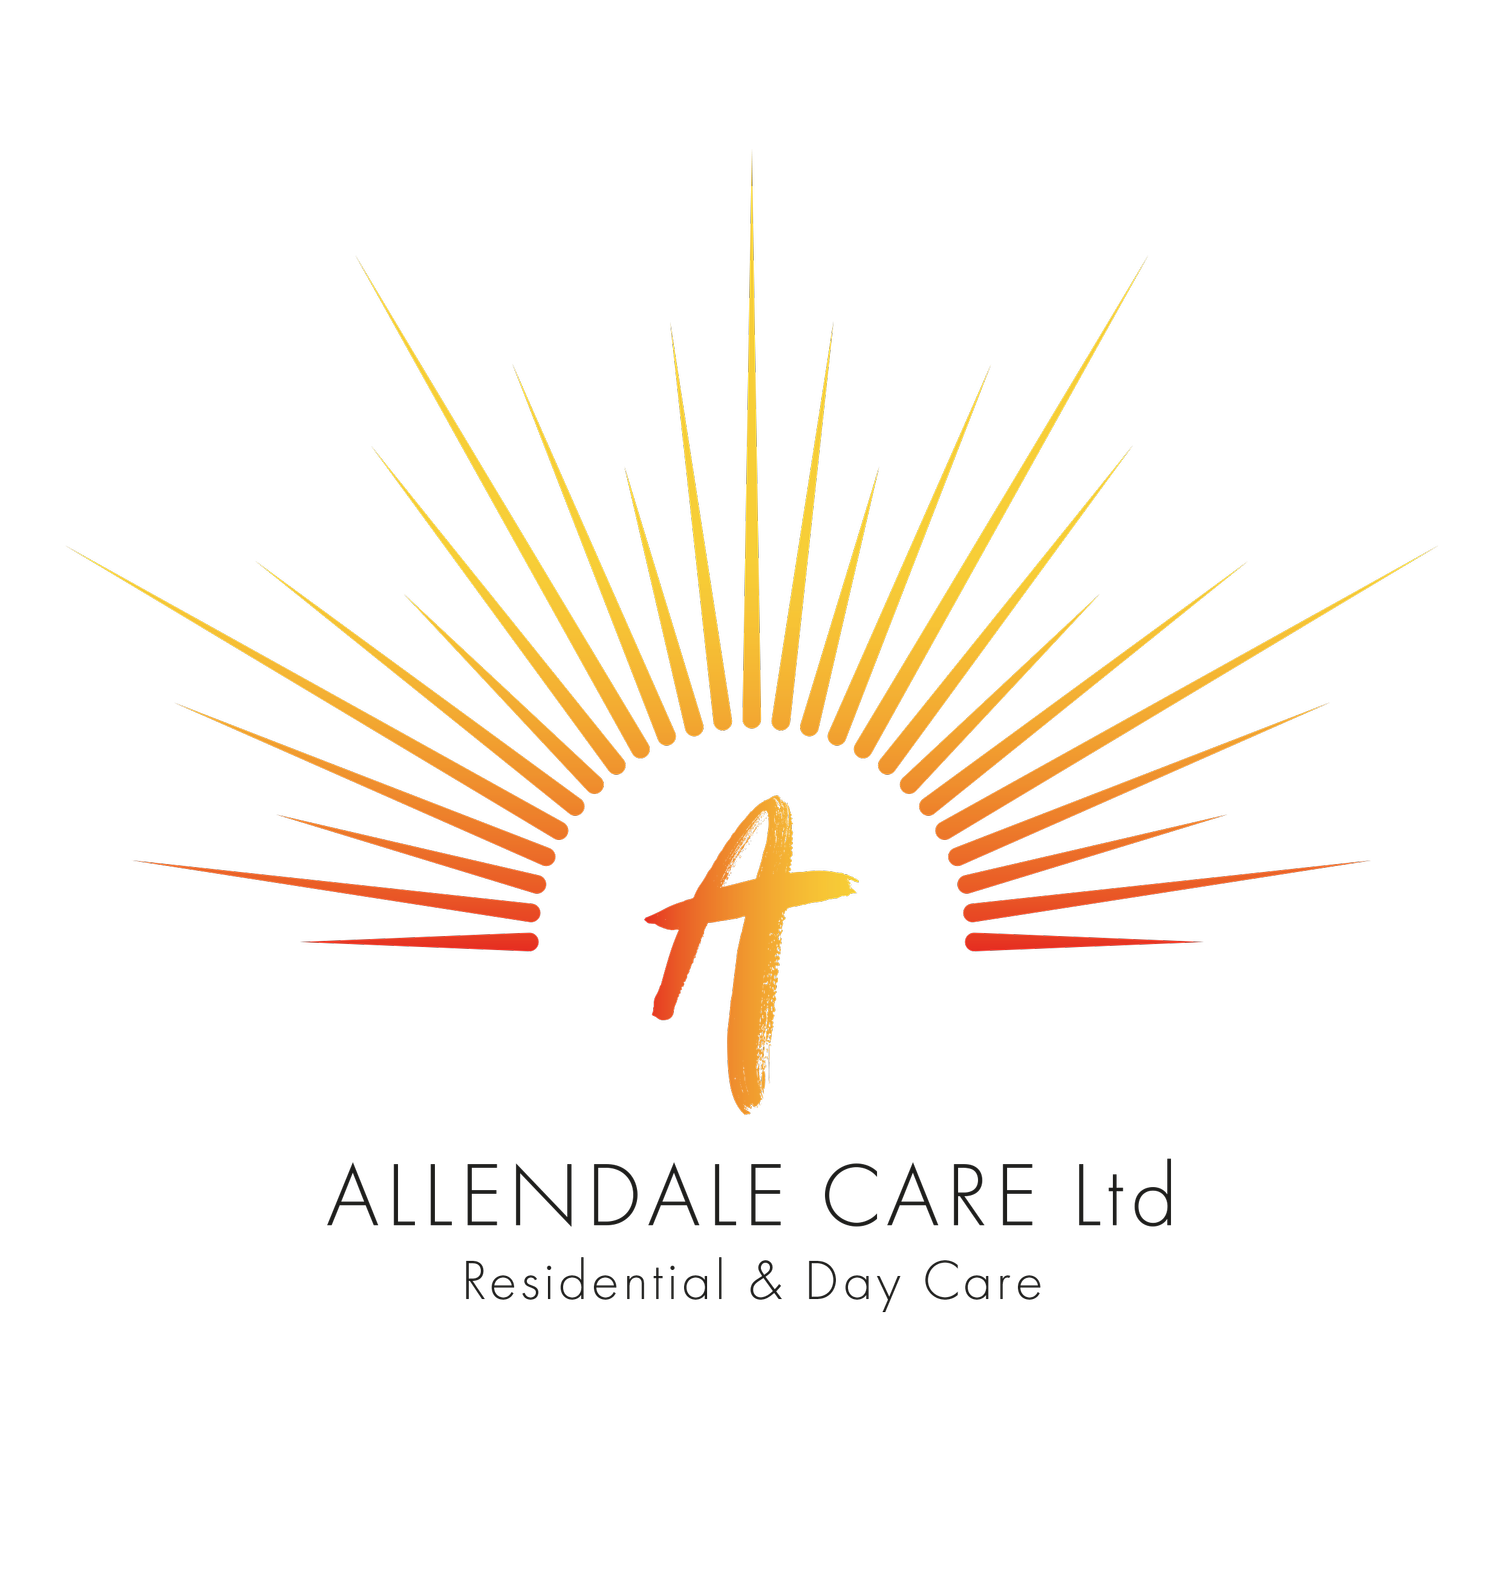 Allendale Care Ltd